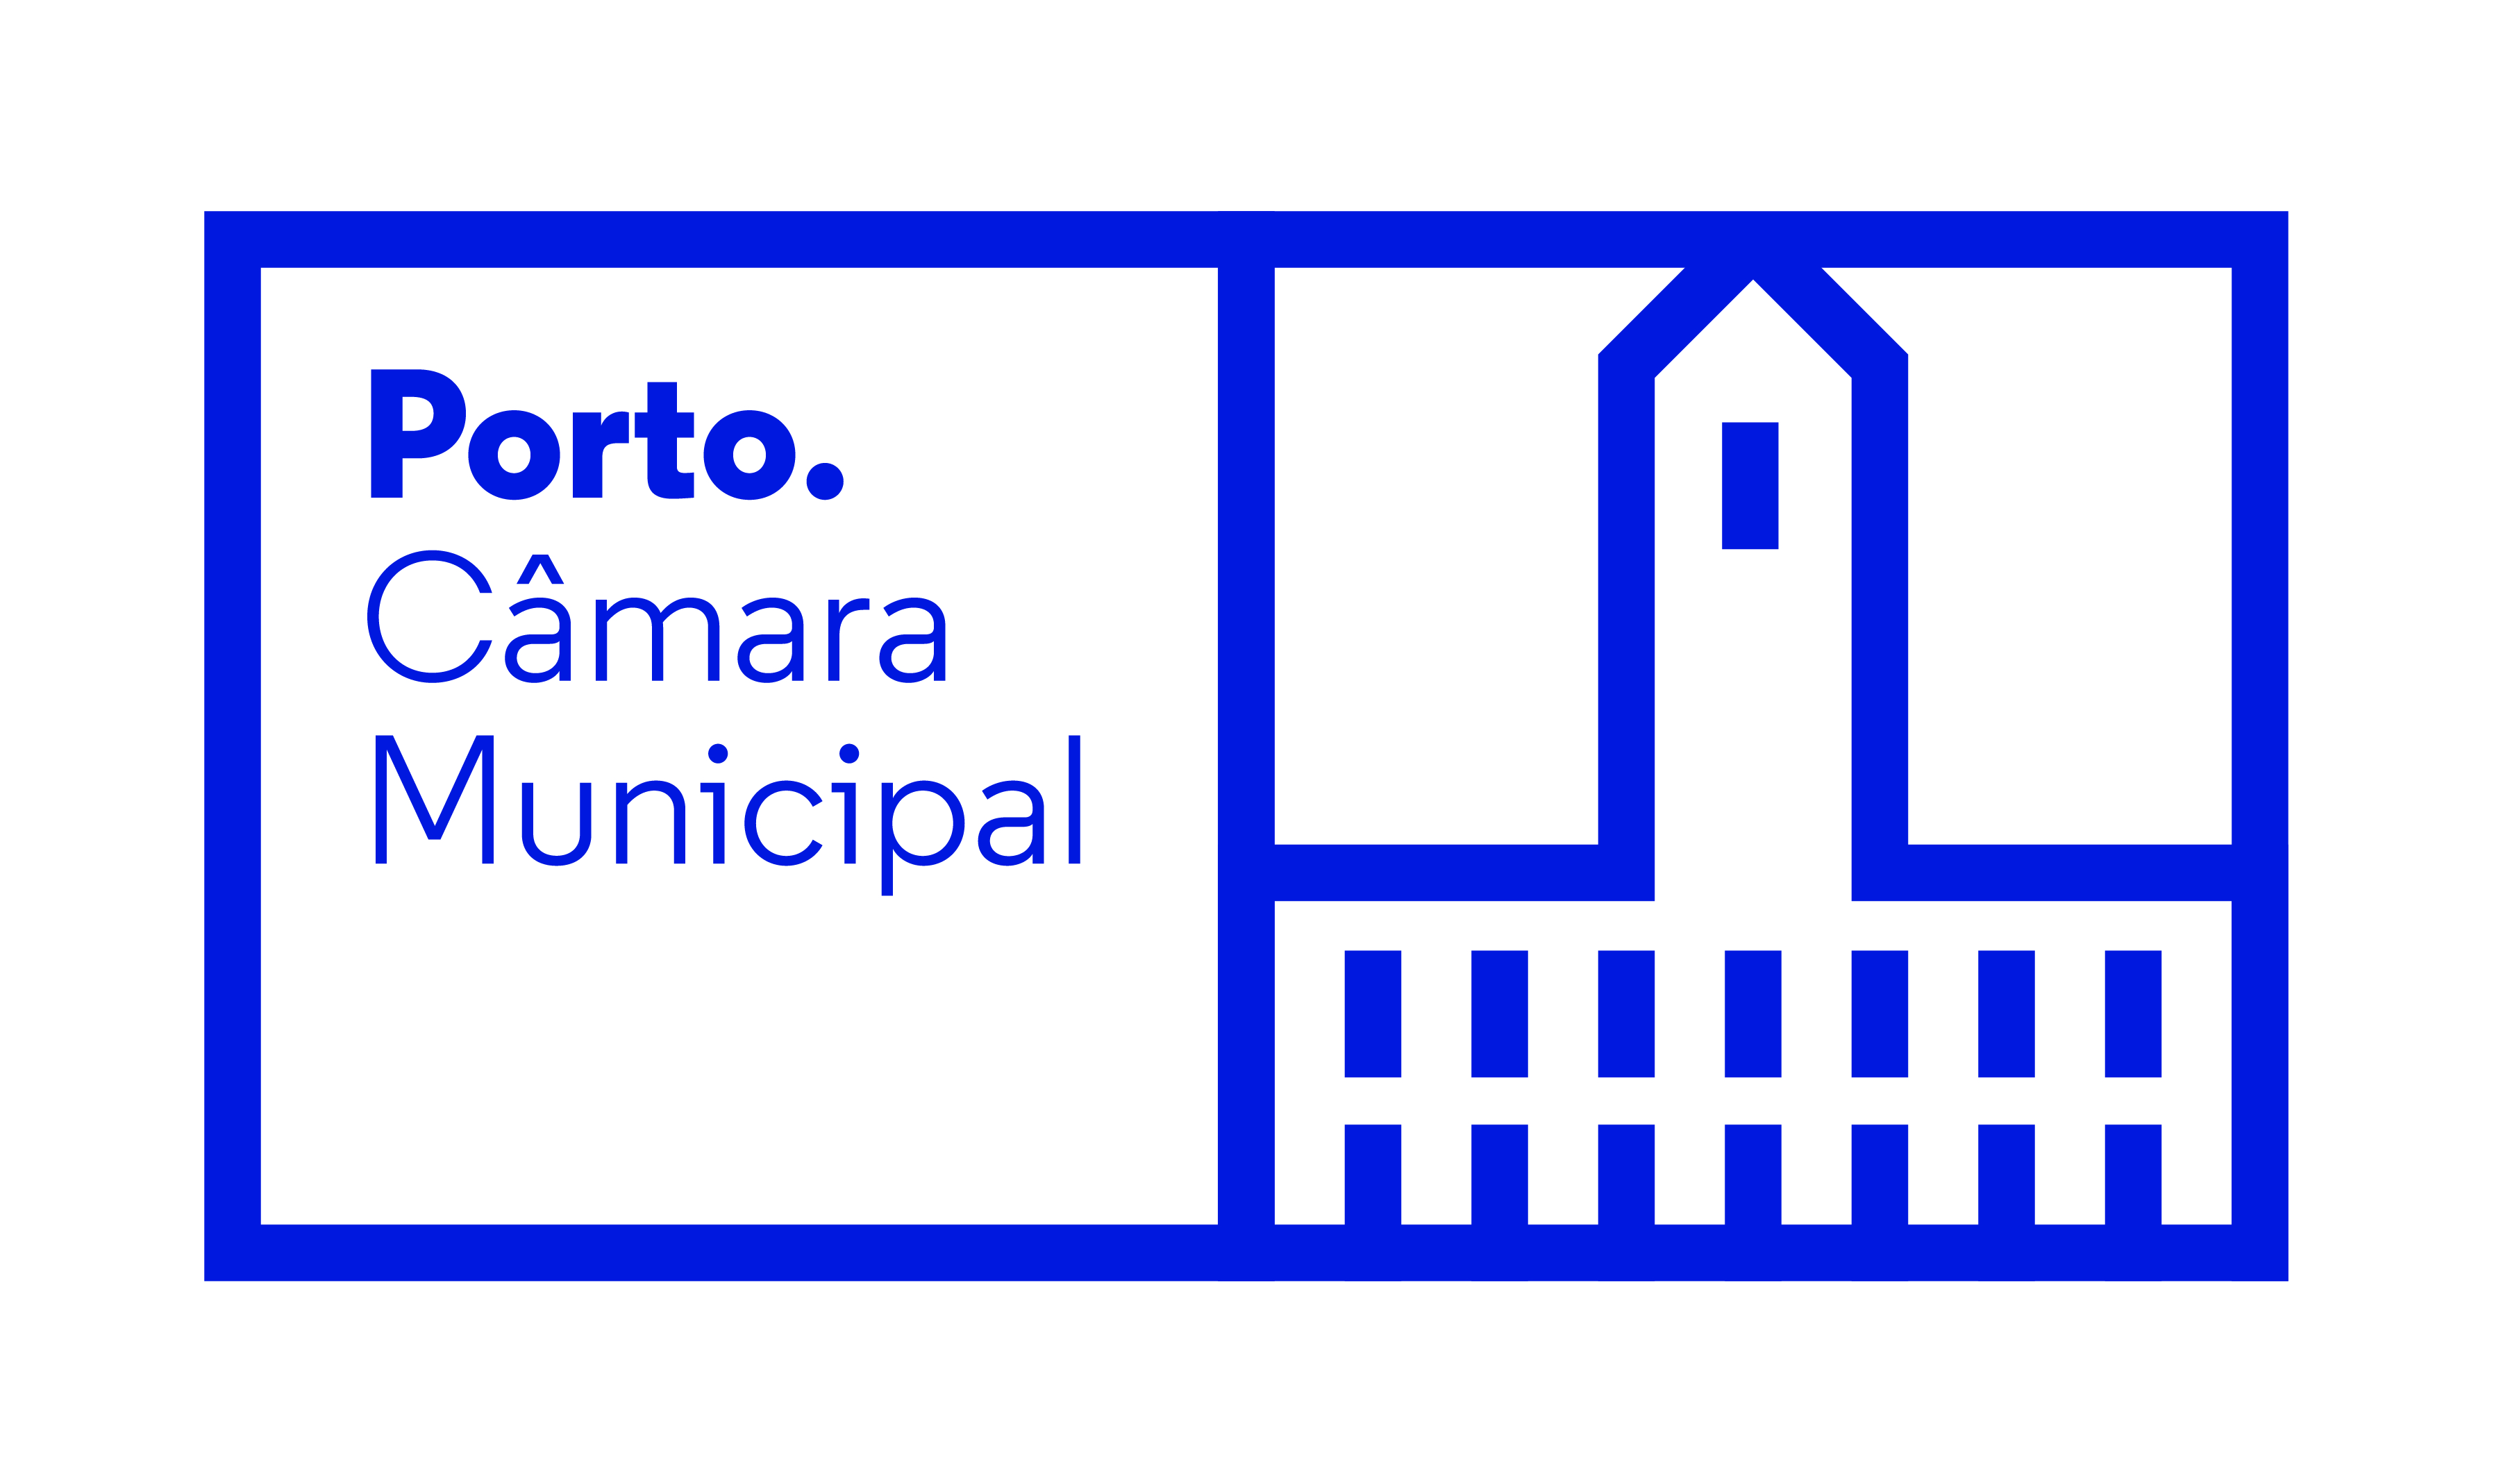 PORTO_Camara_Municipal_logo_comtexto_fb_azul.jpg